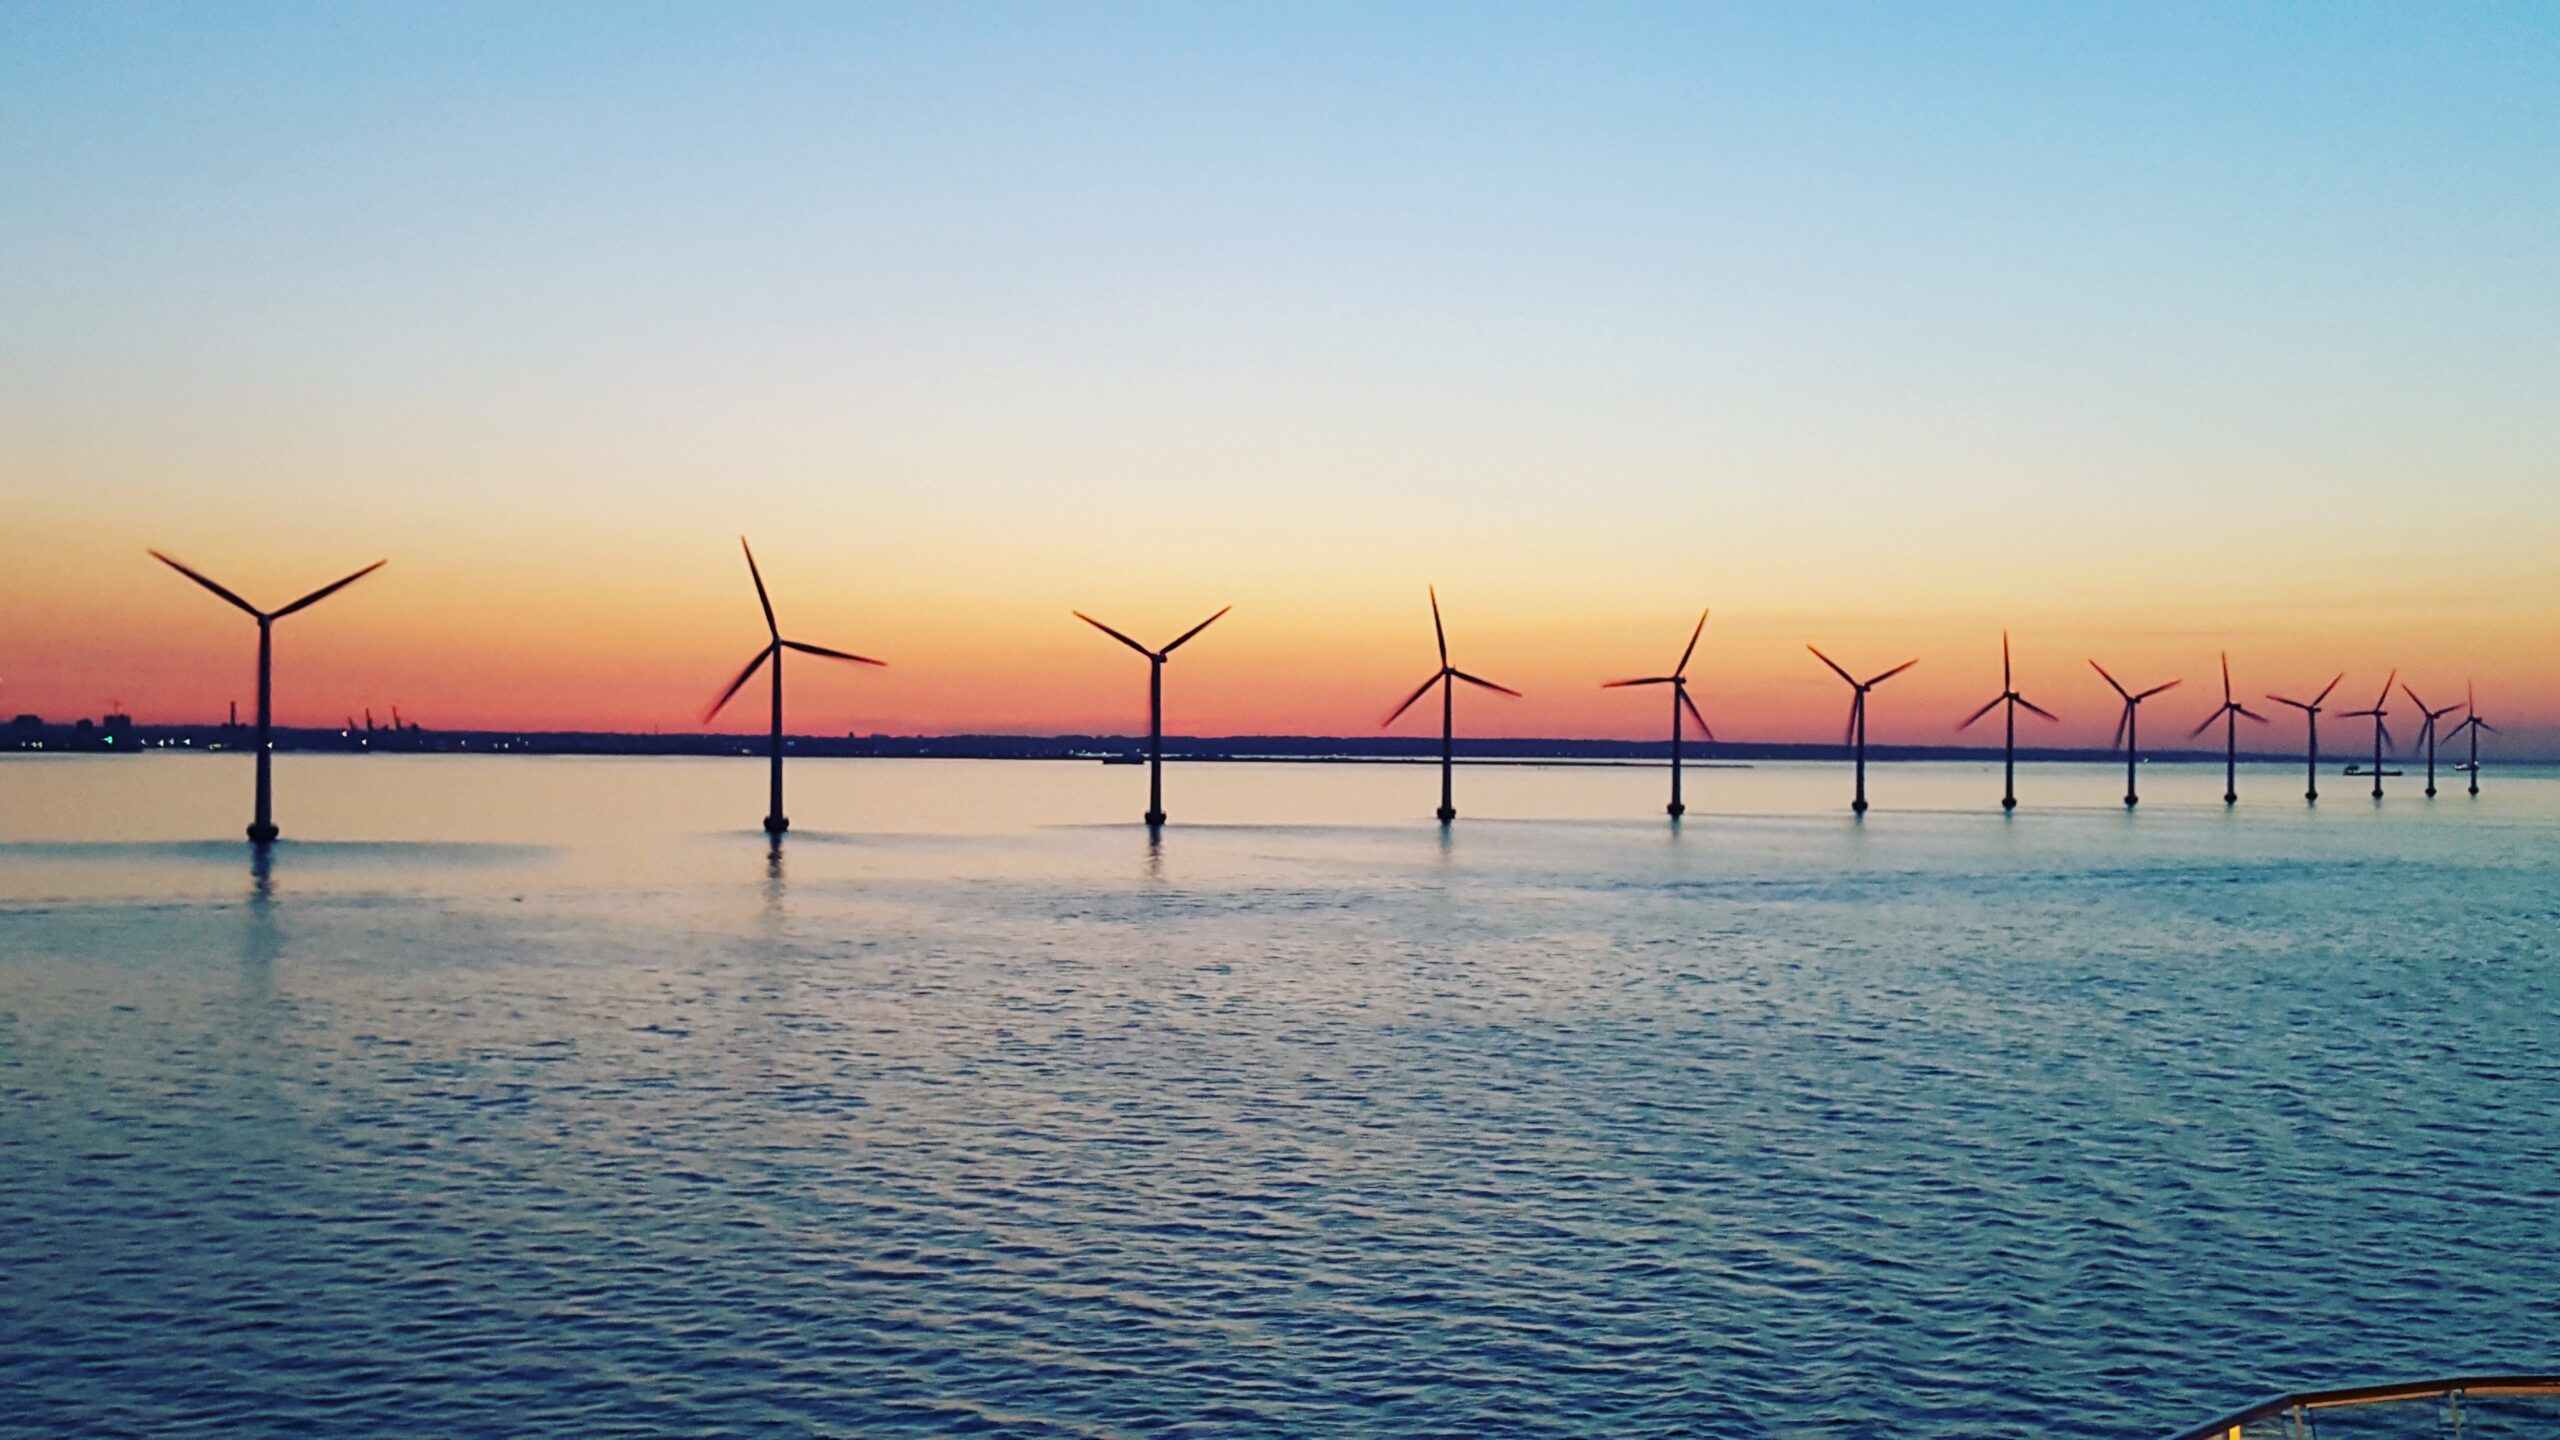 Wind turbines in ocean for green energy, an ESG initiative